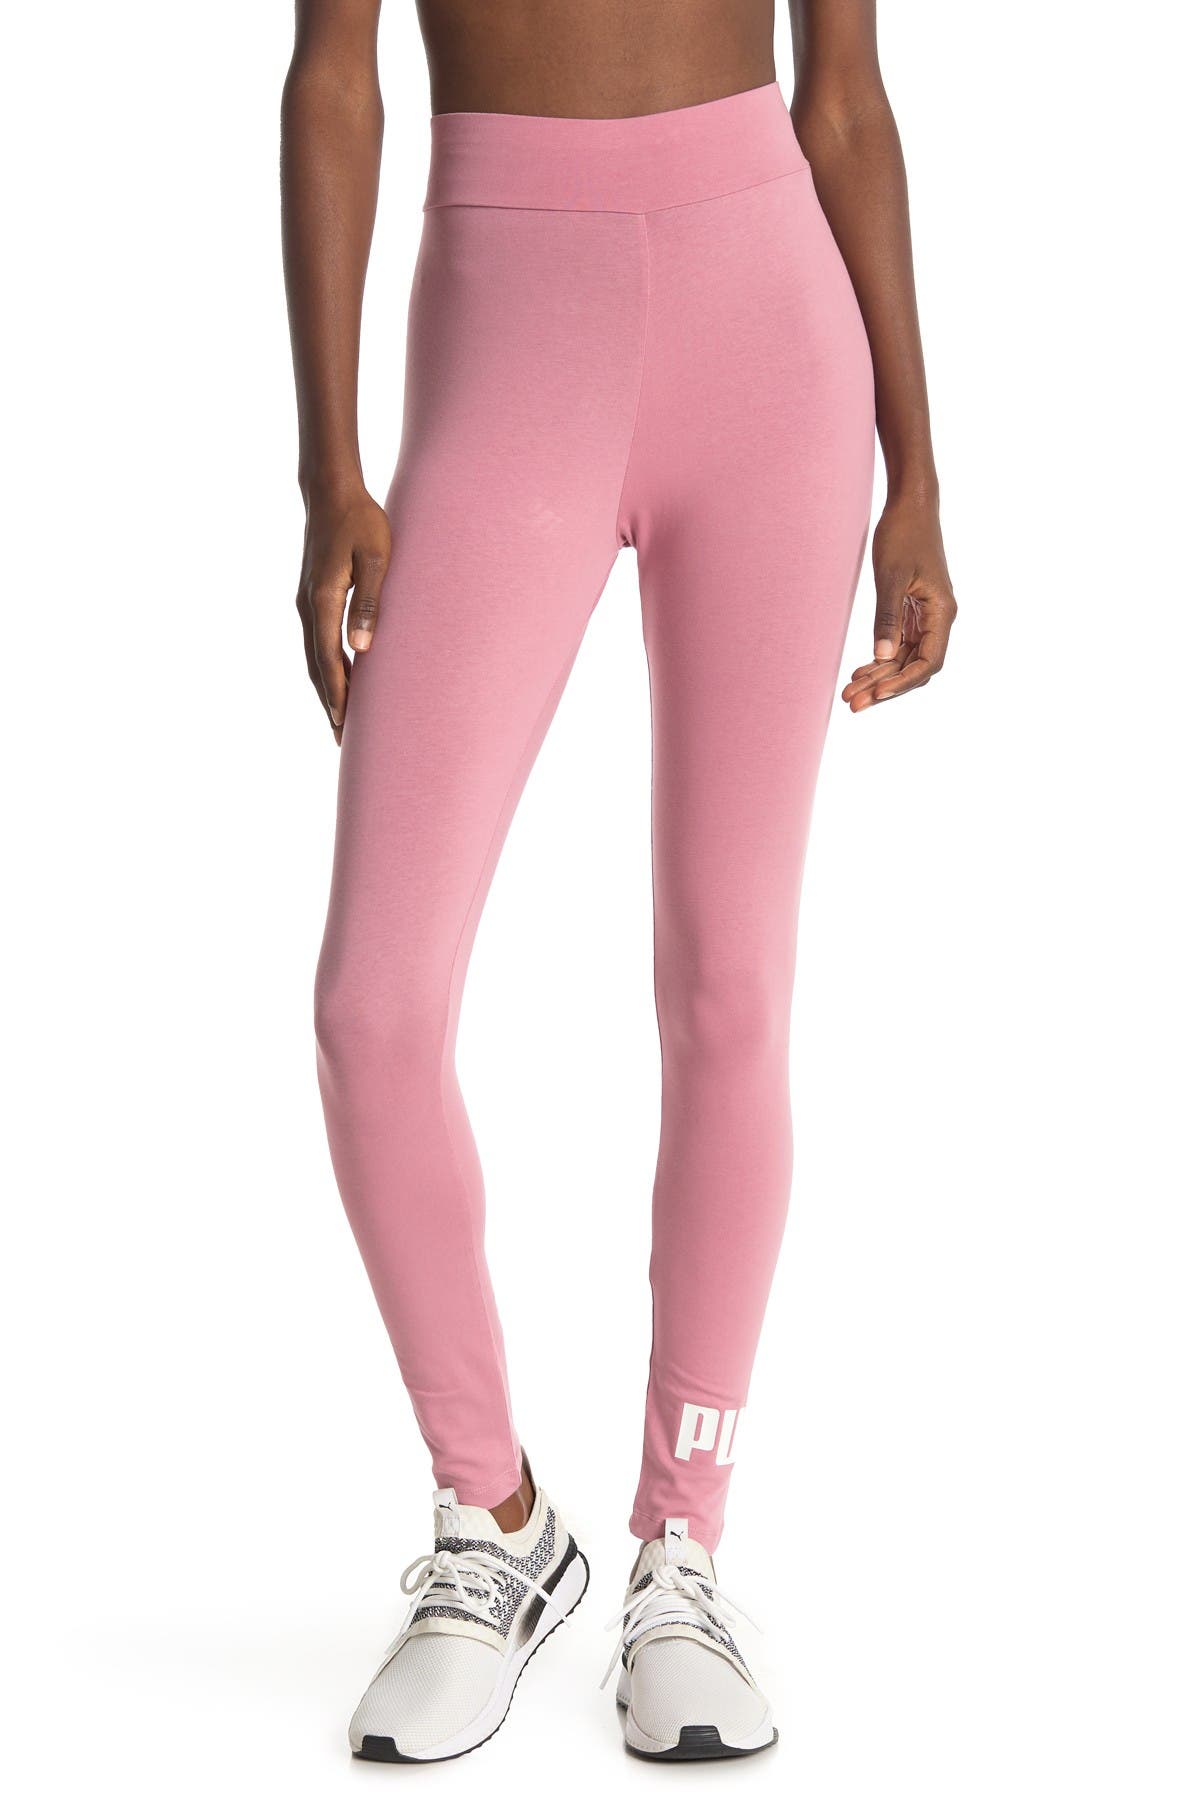 pink puma jogging suit